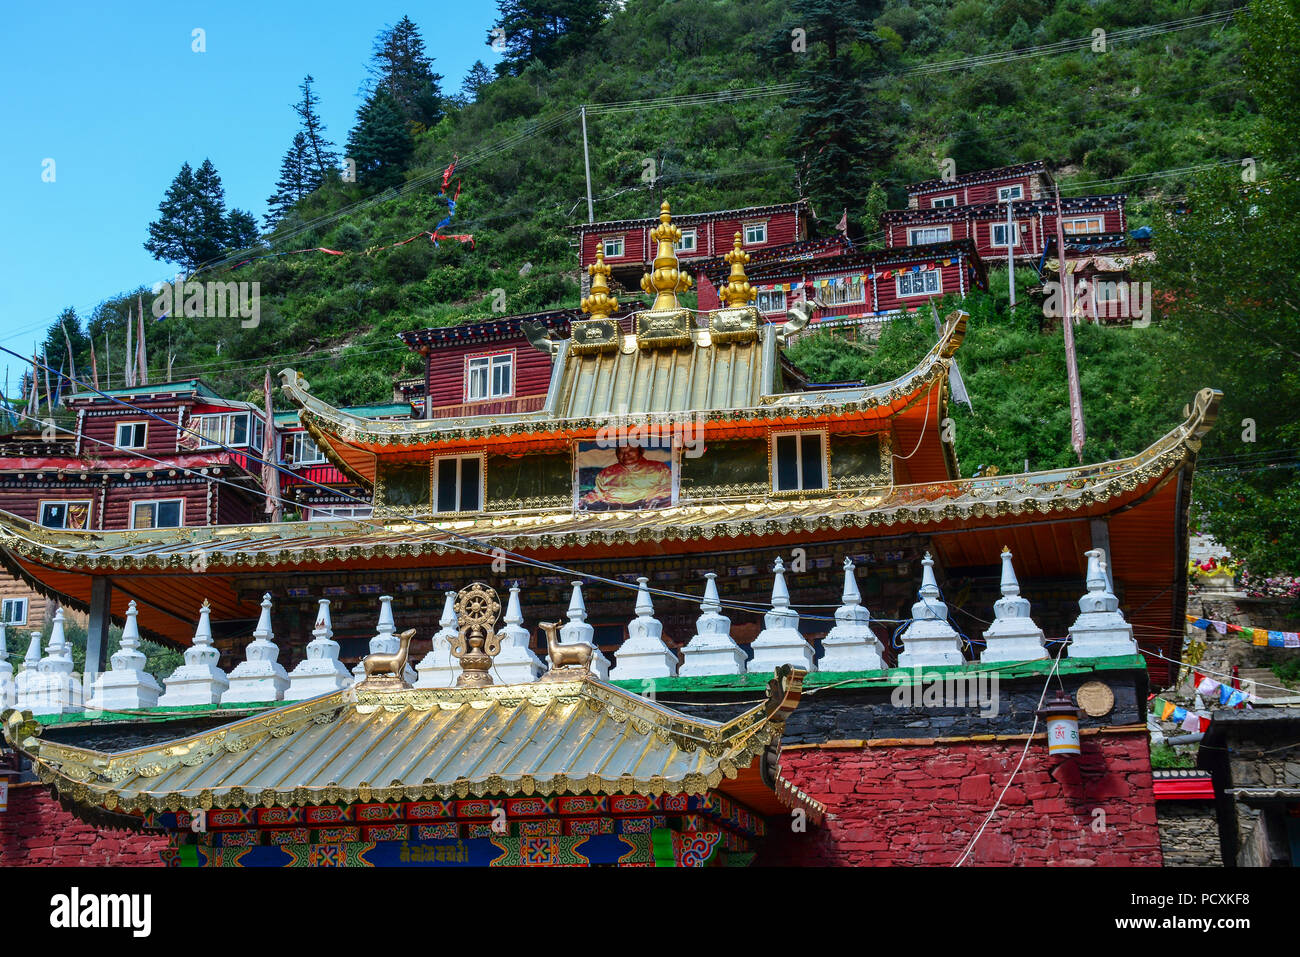 Daocheng, China - Aug 15, 2016. Tibetan temple in Daocheng, China. Daocheng is located in the eastern Hengduan Mountains, Sichuan Province. Stock Photo